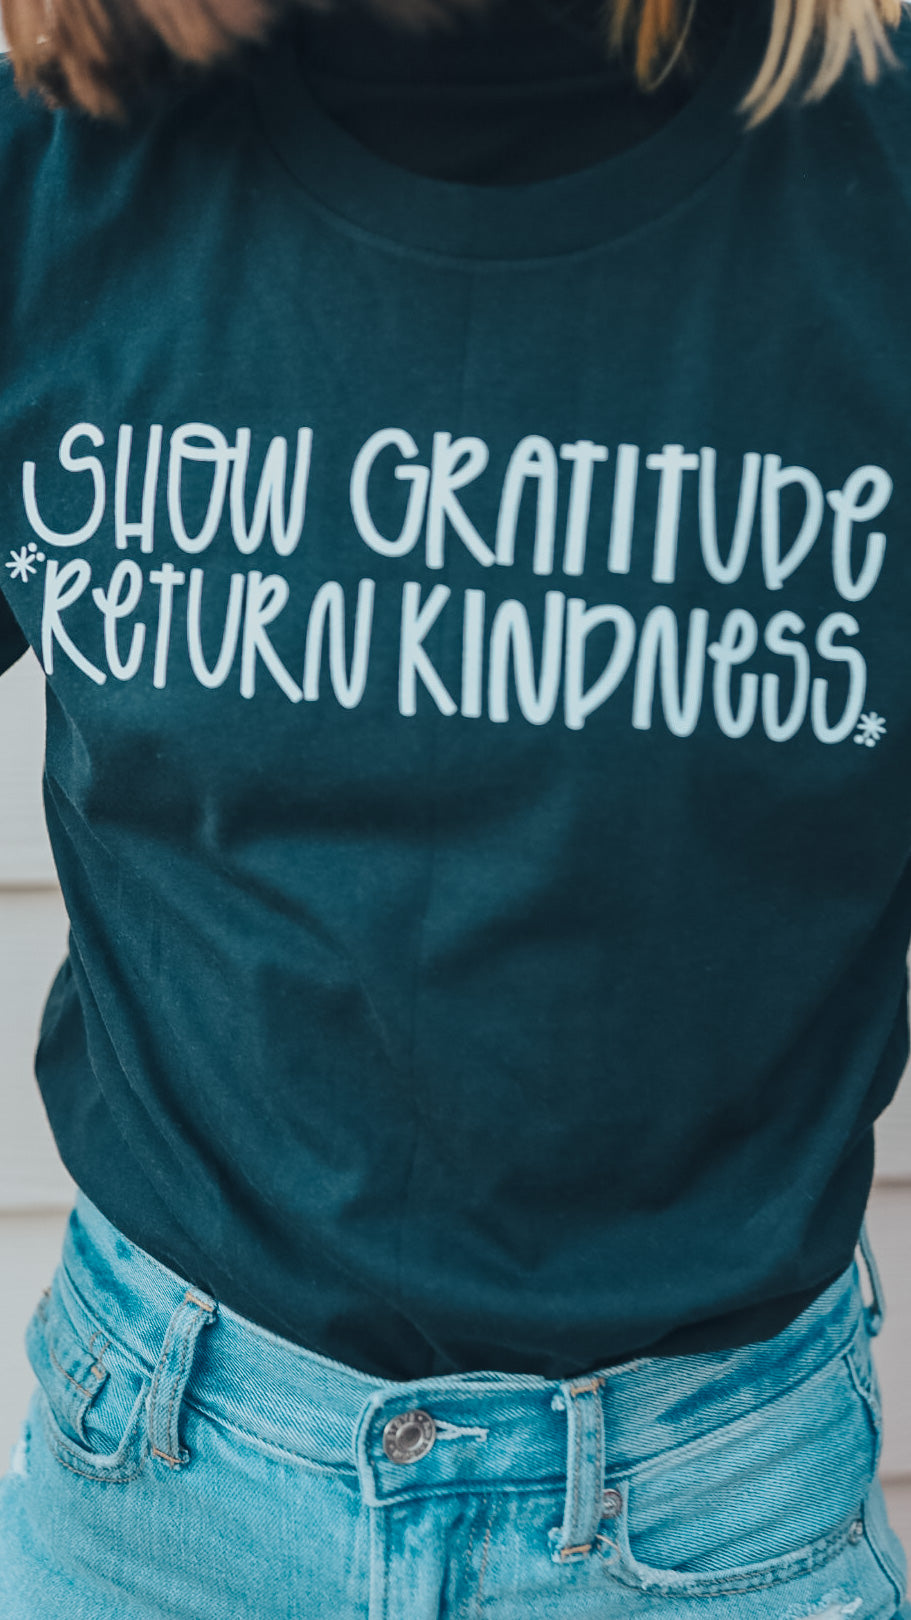 Show Gratitude, Return Kindness Tee.